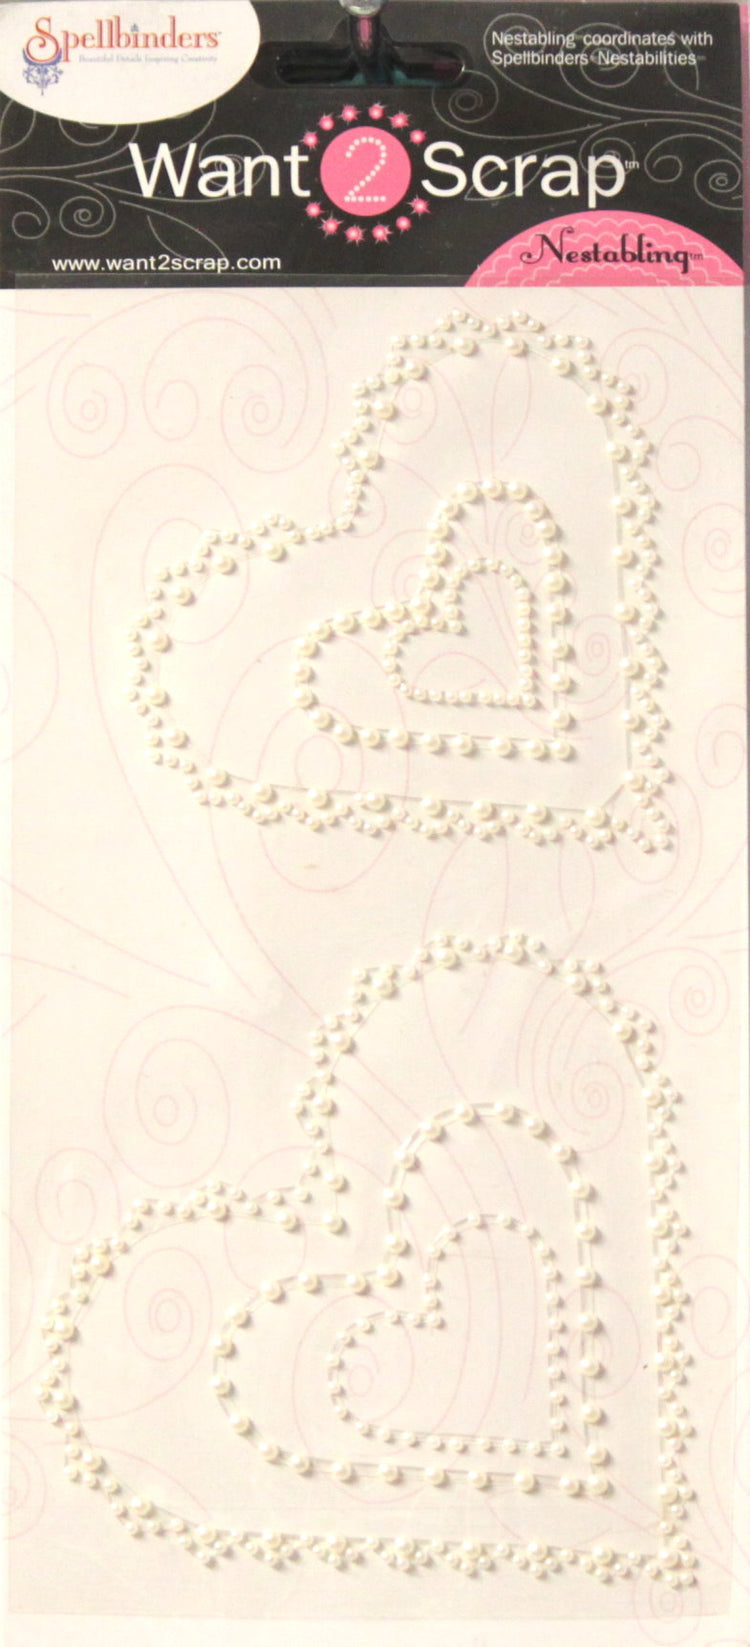 Spellbinders Want 2 Scrap Self-Adhesive Scalloped Hearts White Pearls Embellishments